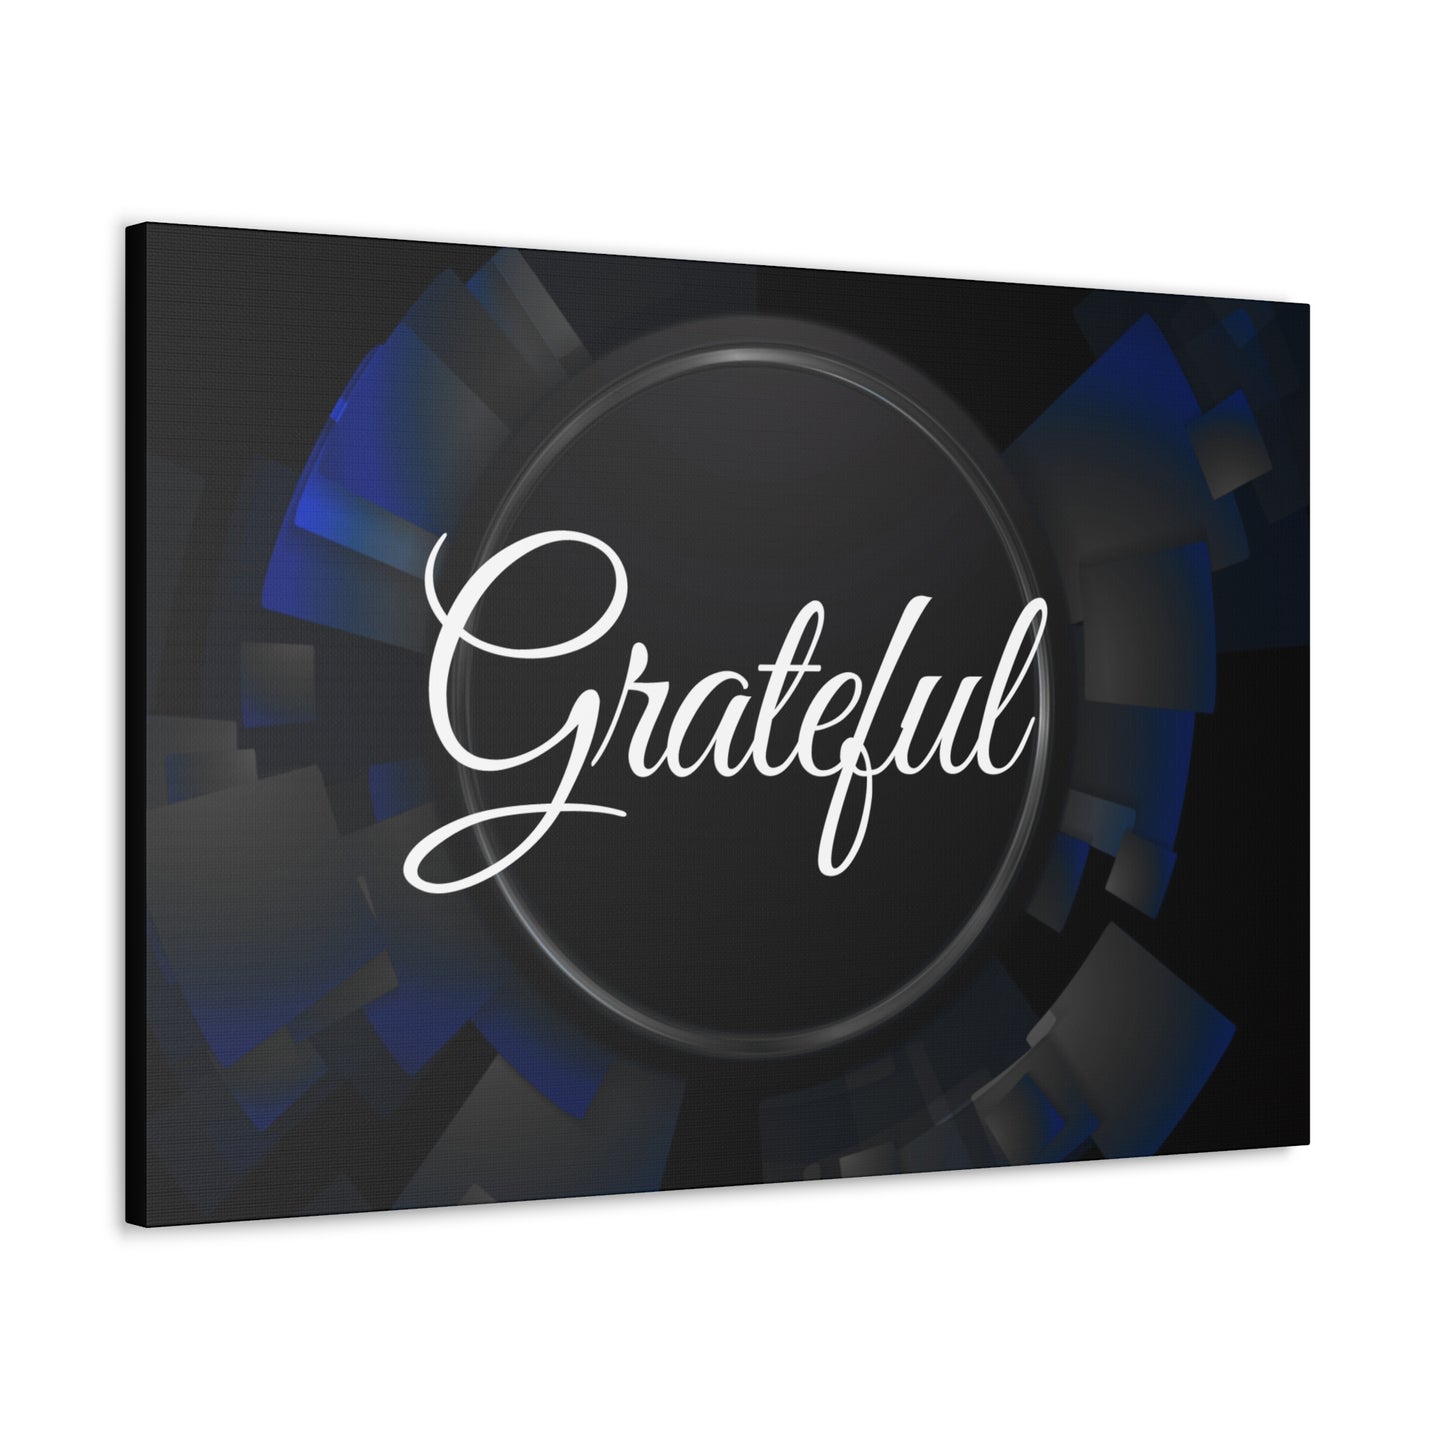 Christian Wall Art: Grateful (Wood Frame Ready to Hang)